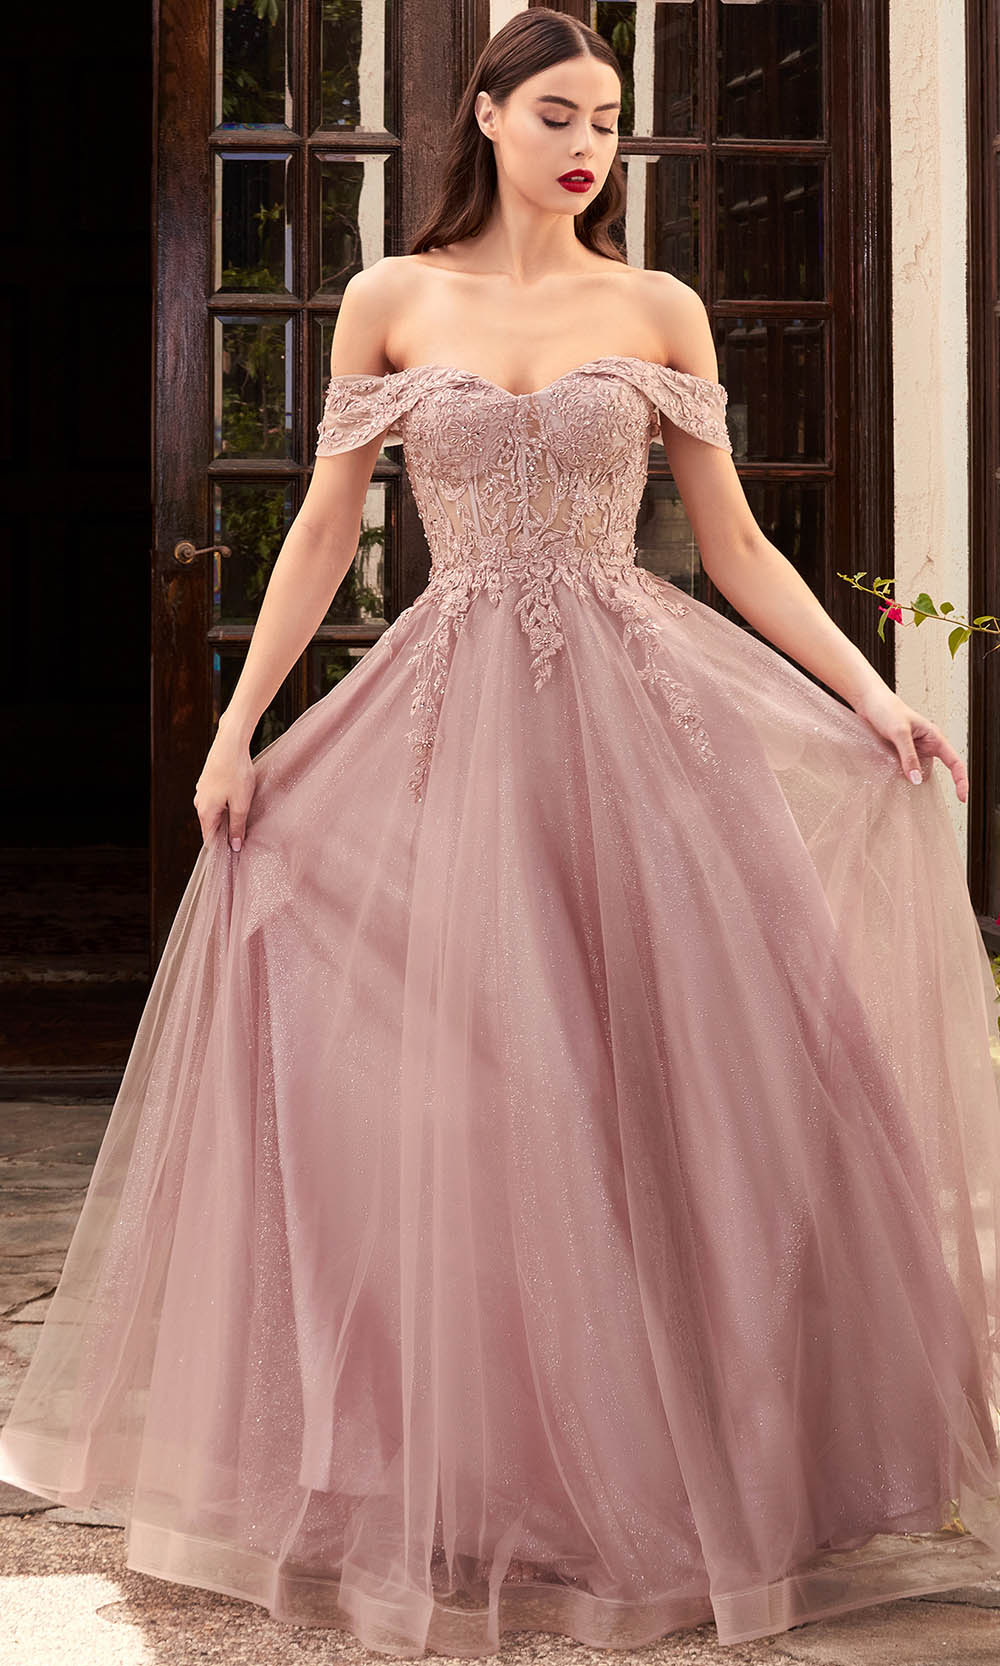 Cinderella Divine CD961 - Corset Prom Gown Special Occasion Dress 2 / Mauve